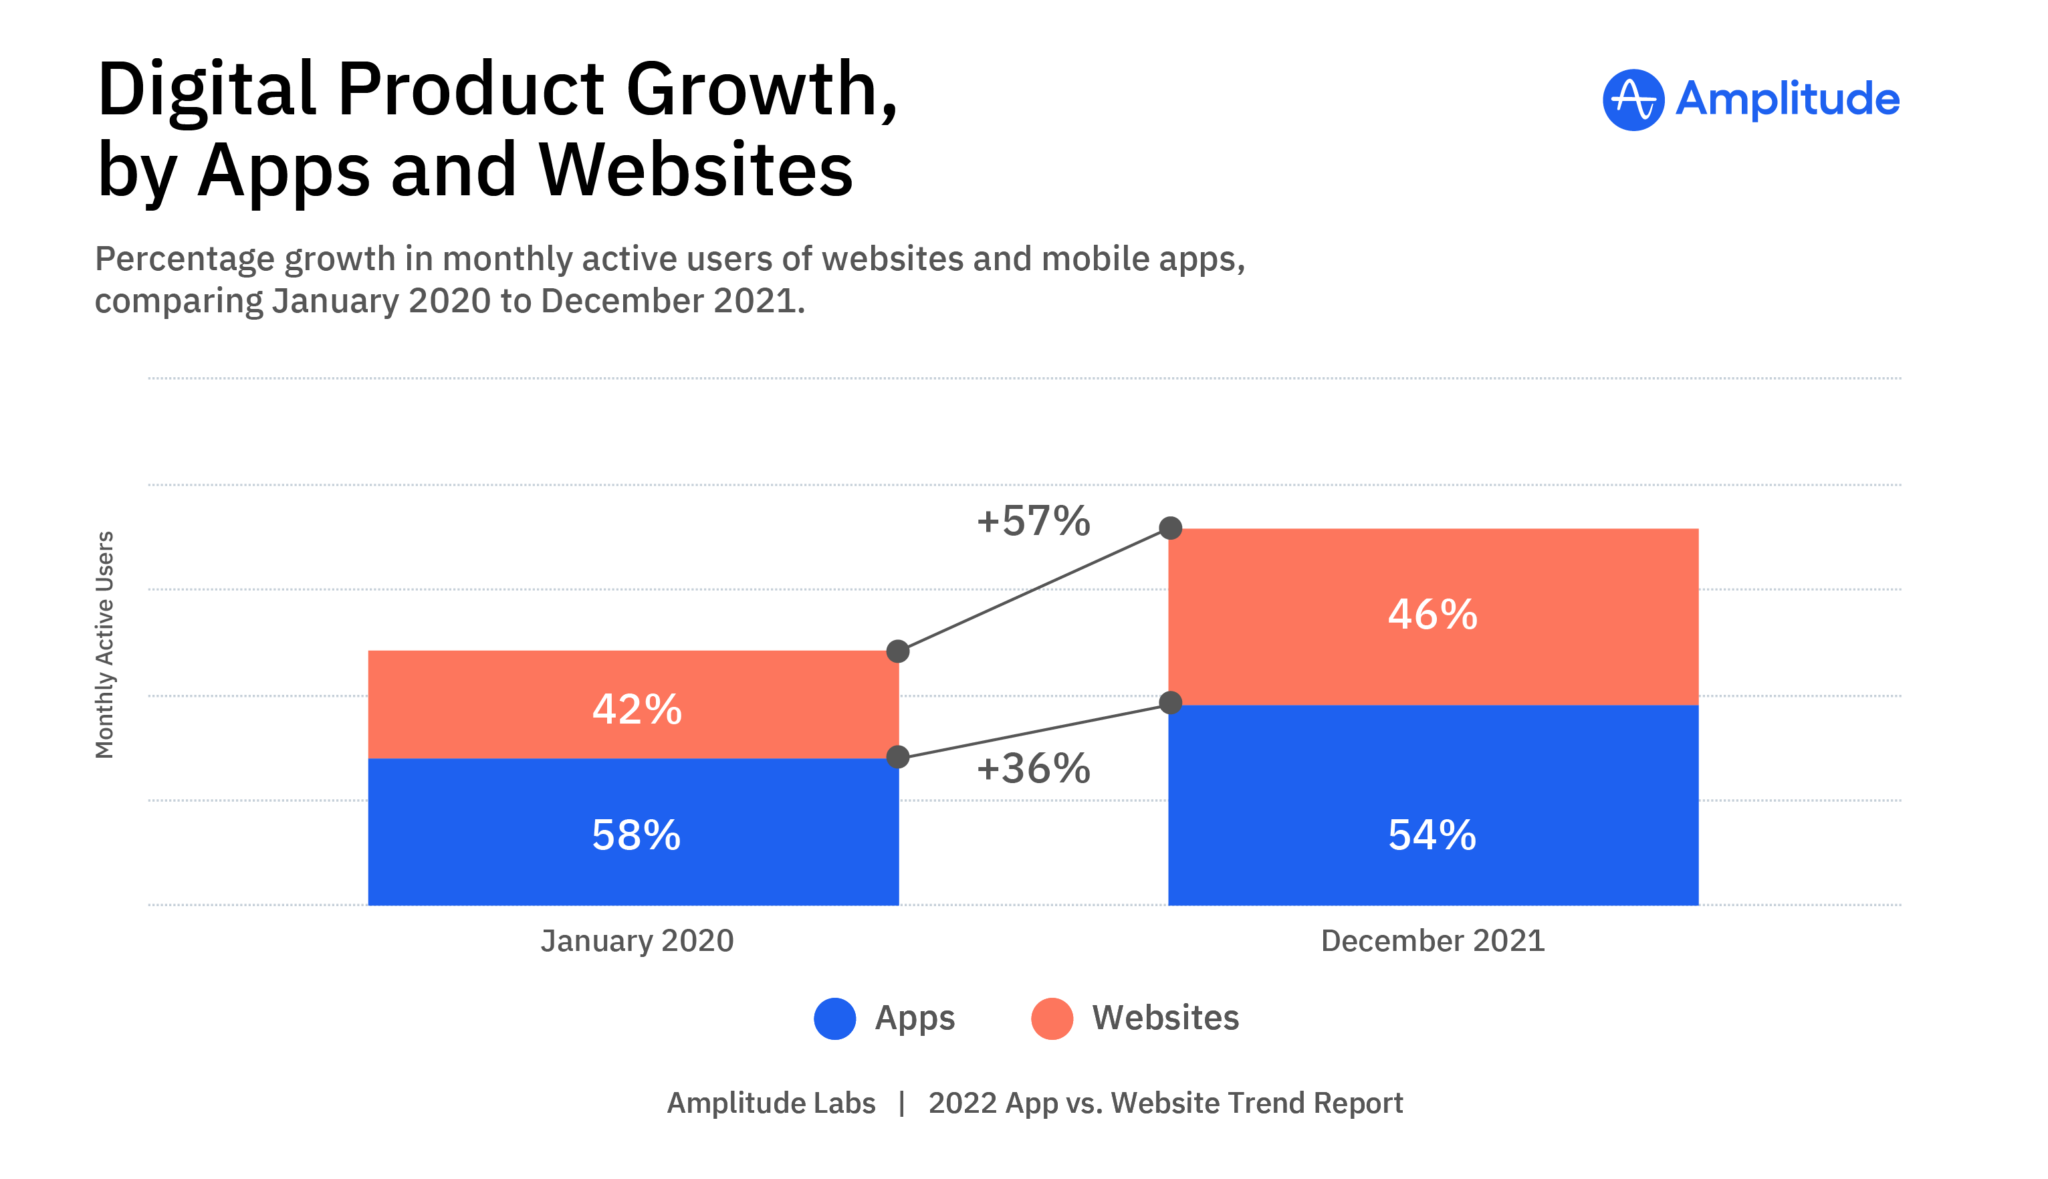 App vs Website Growth, Jan 2020 vs Dec 2021